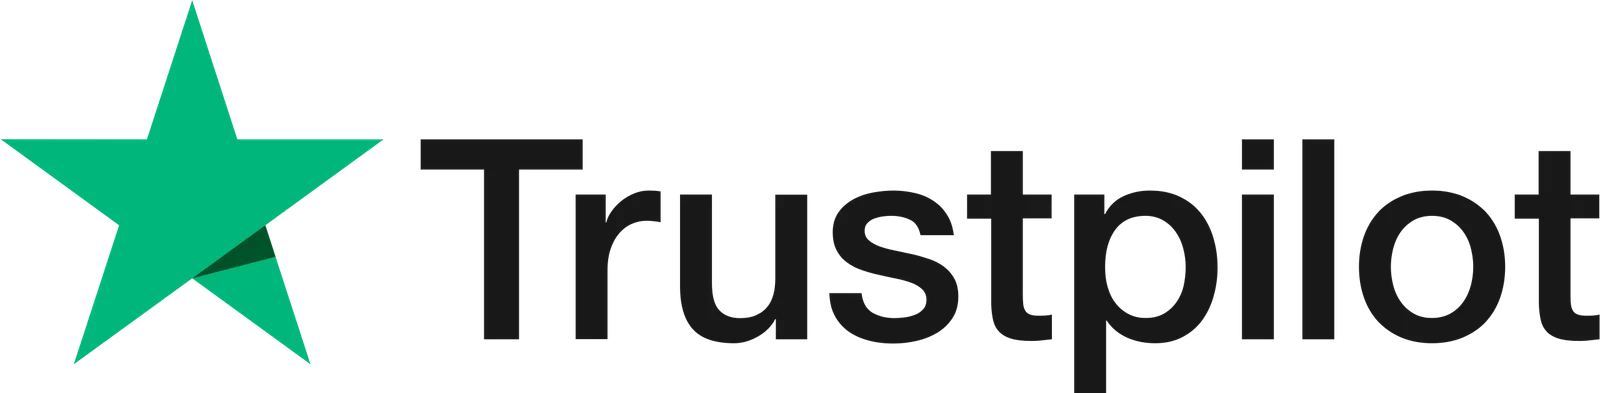 Trustpilot Reviews Image